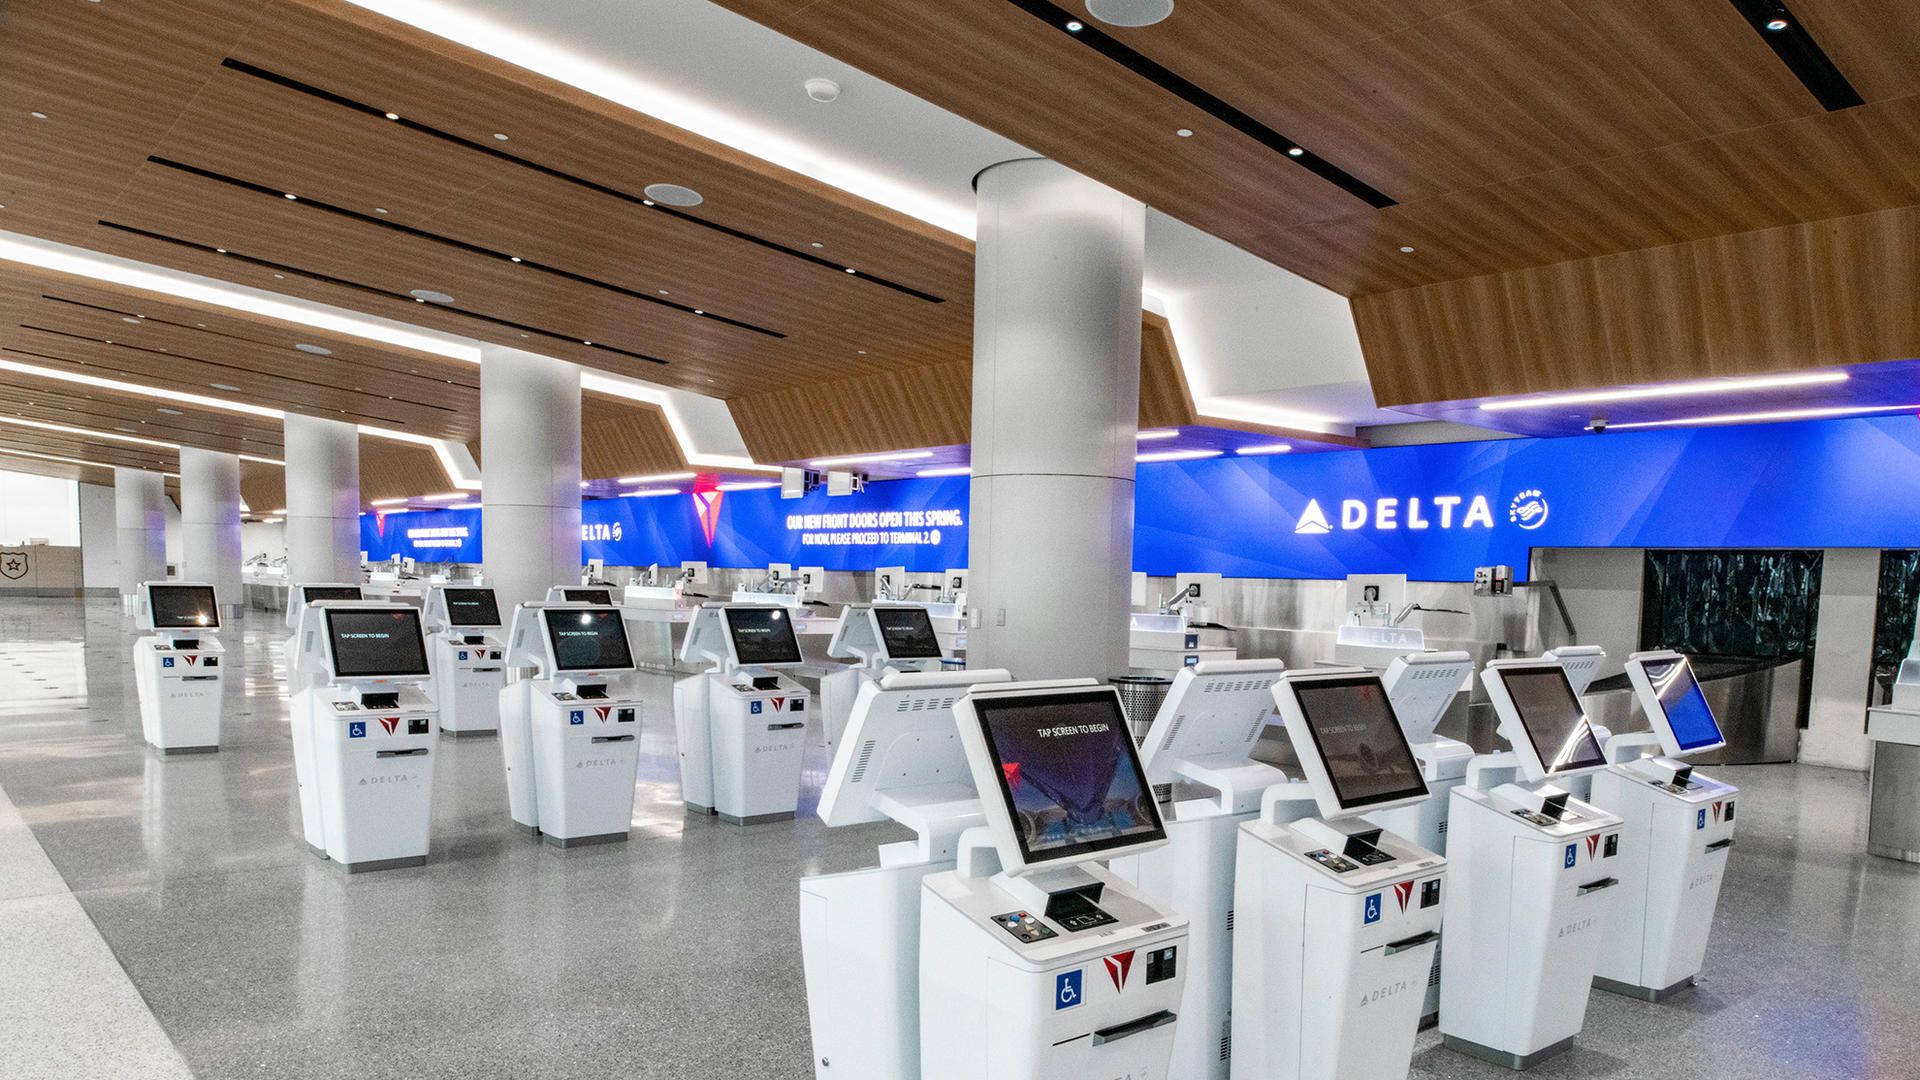 Delta T3 LAX baggage drop kiosks